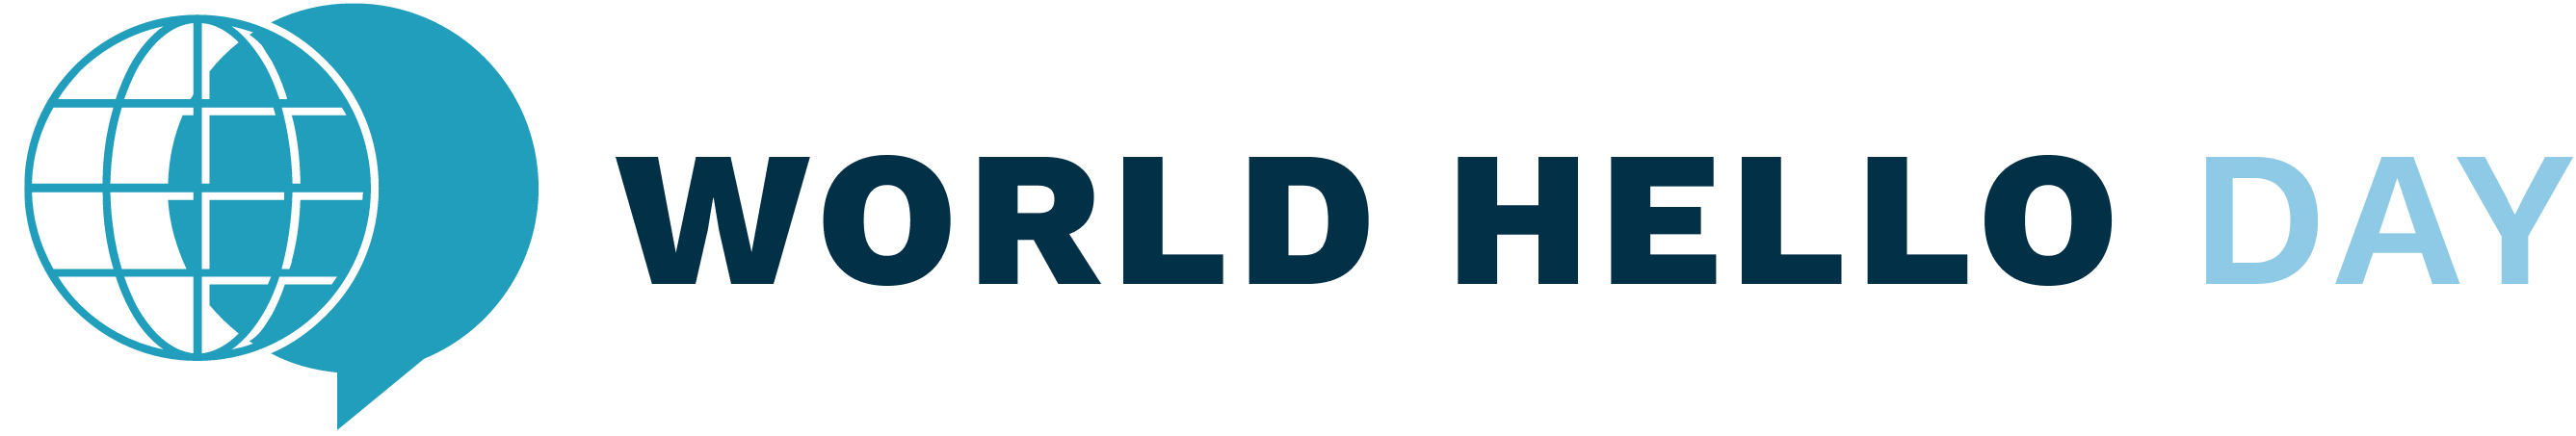 World Hello Day, Logo, HORZ